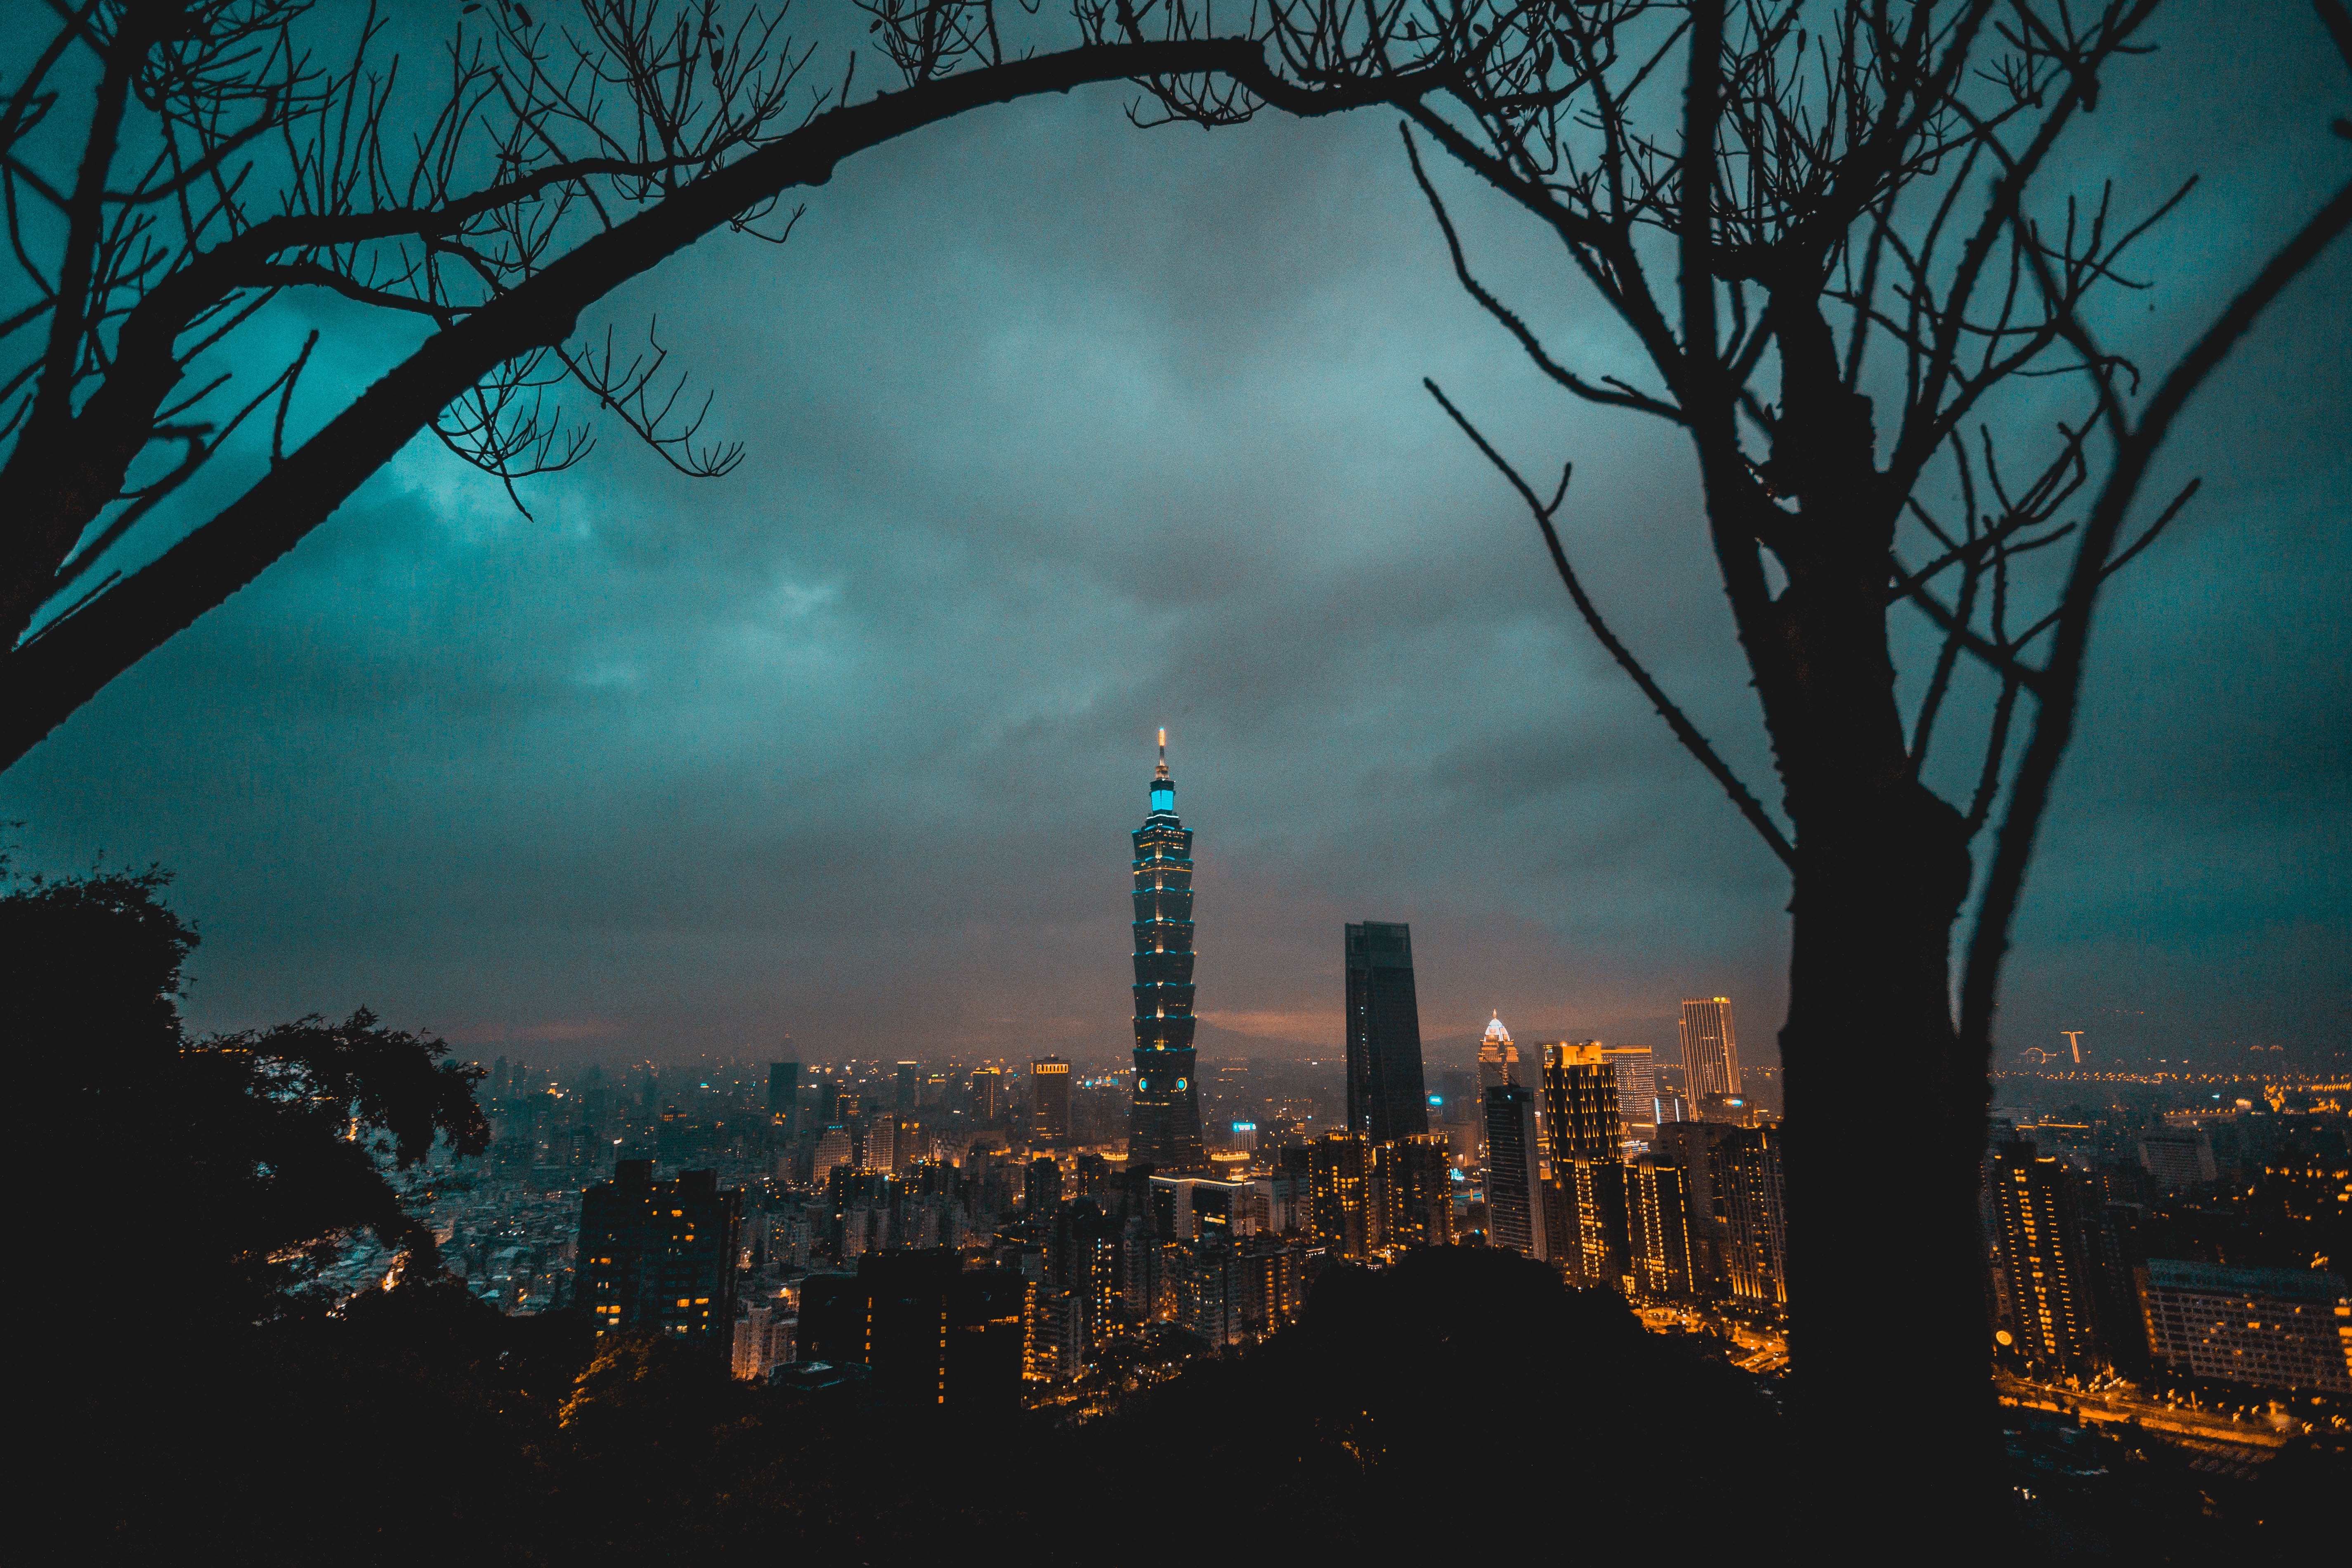 Lights evening, cityscape, thunderclouds, urban landscape 8k Backgrounds